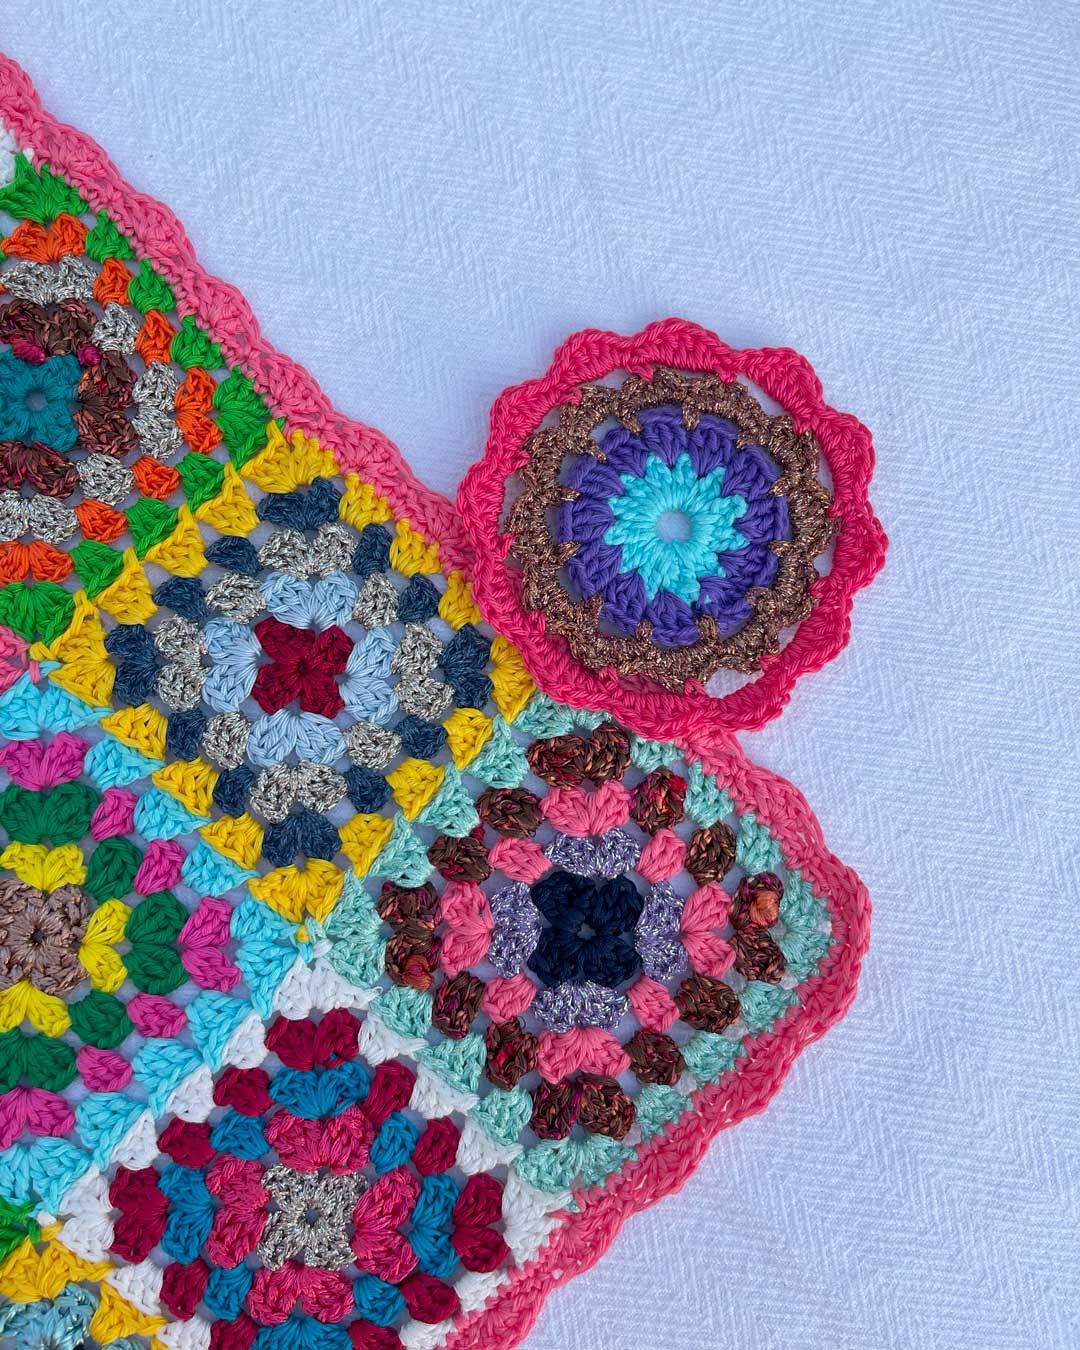 Handmade crochet coaster - Almace